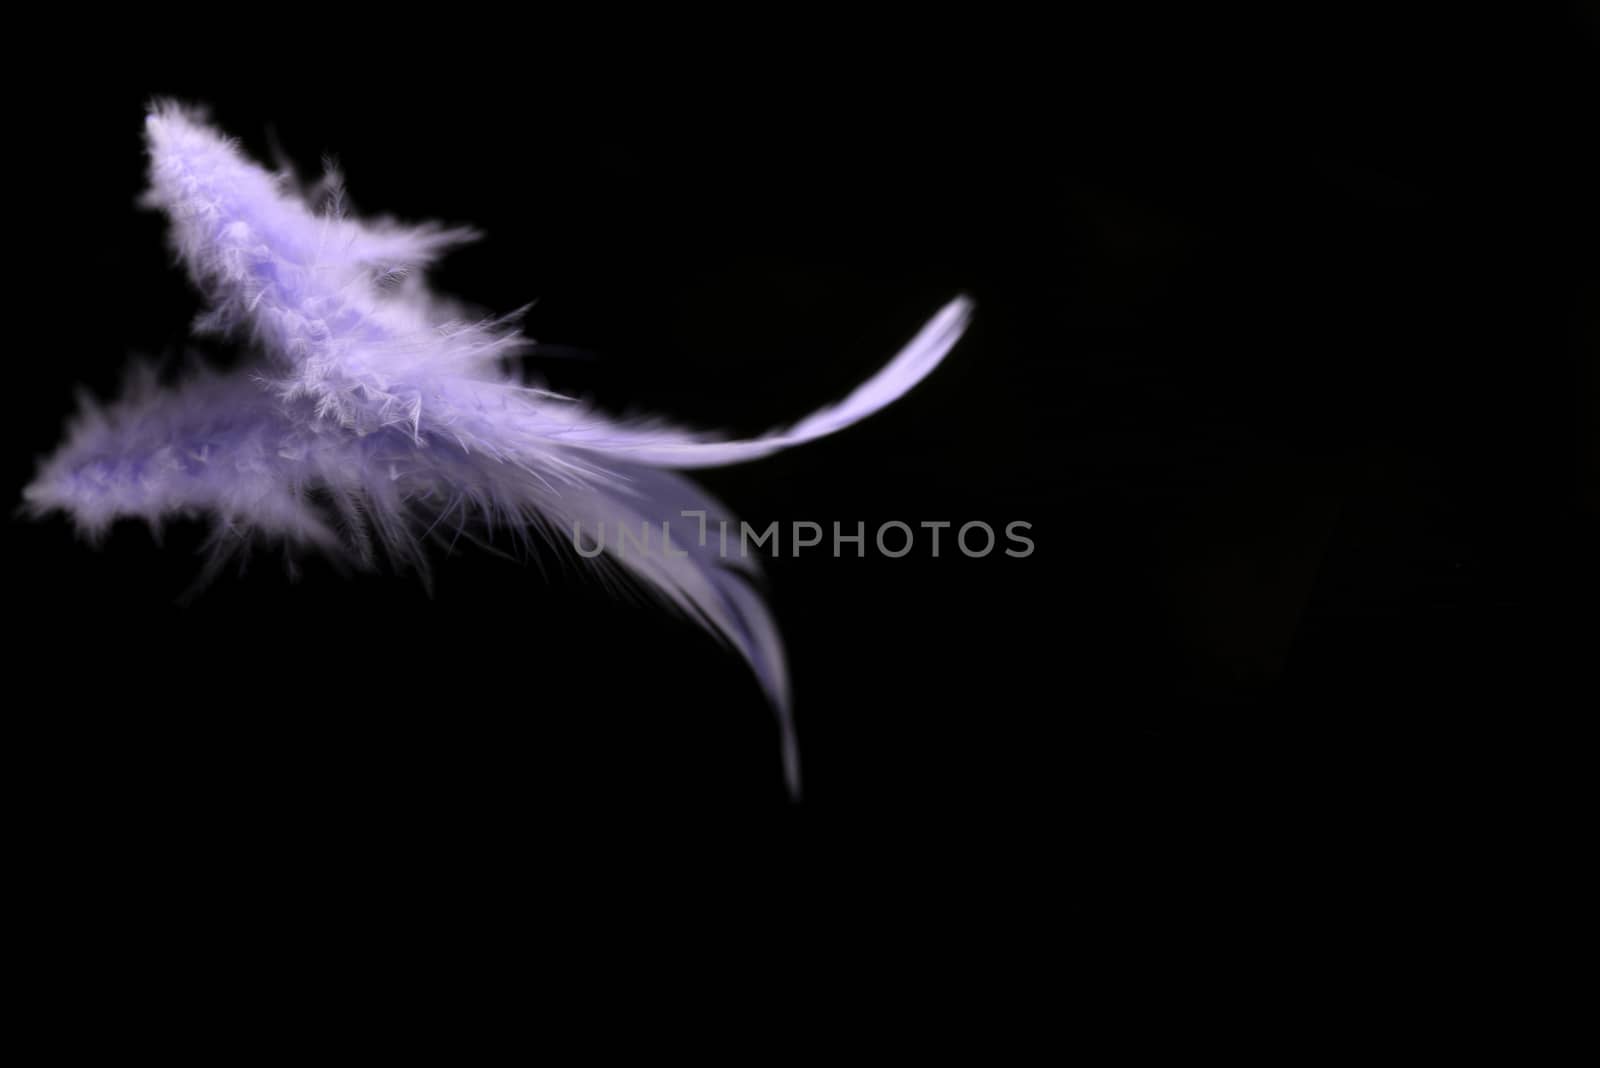 Blurred violet feather background by stellar